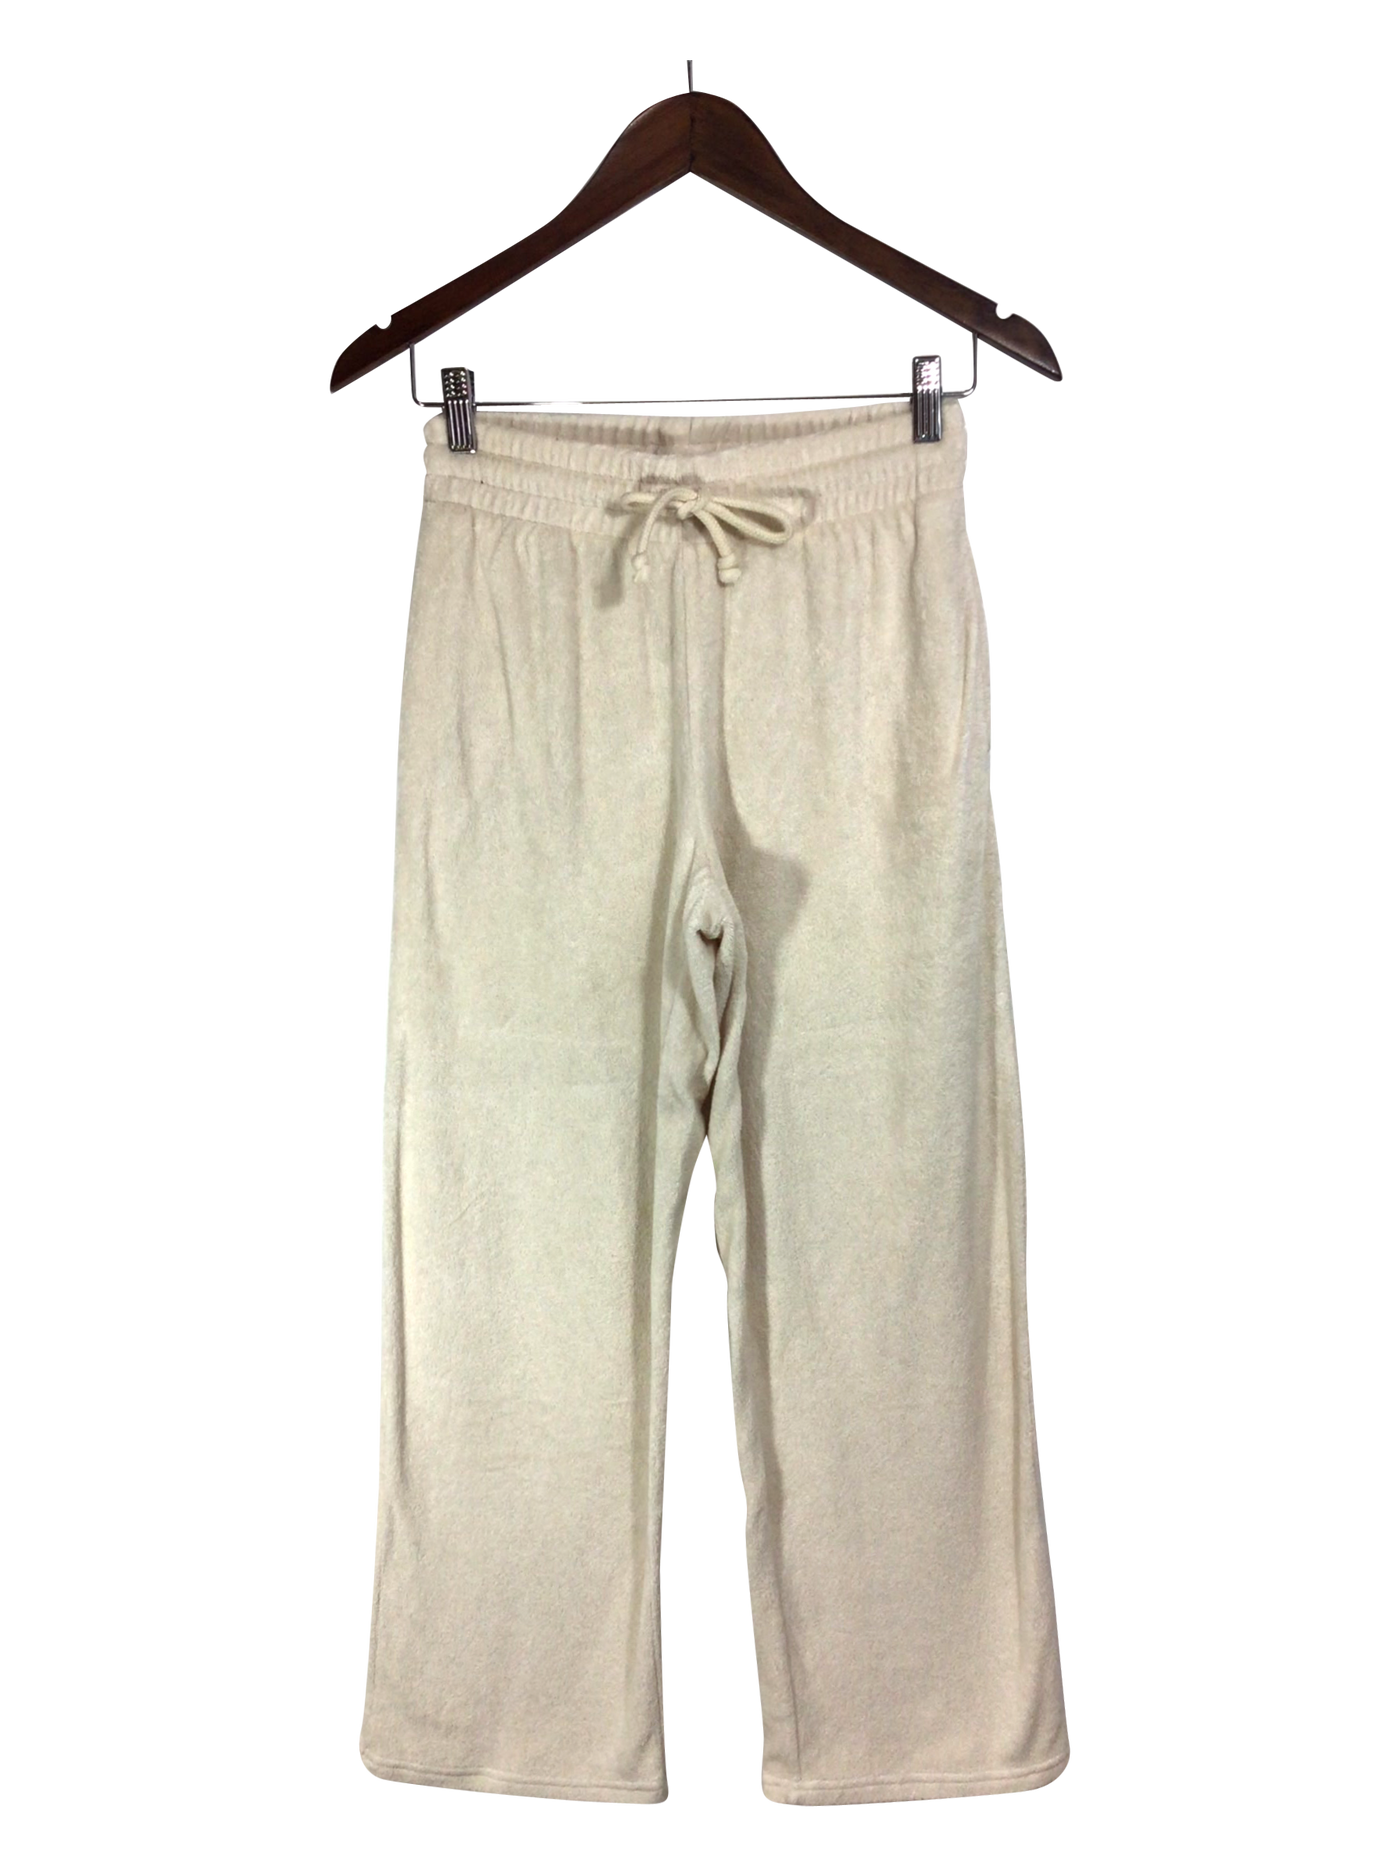 WILFRED FREE Pant Regular fit in White - Size XS | 20.14 $ KOOP